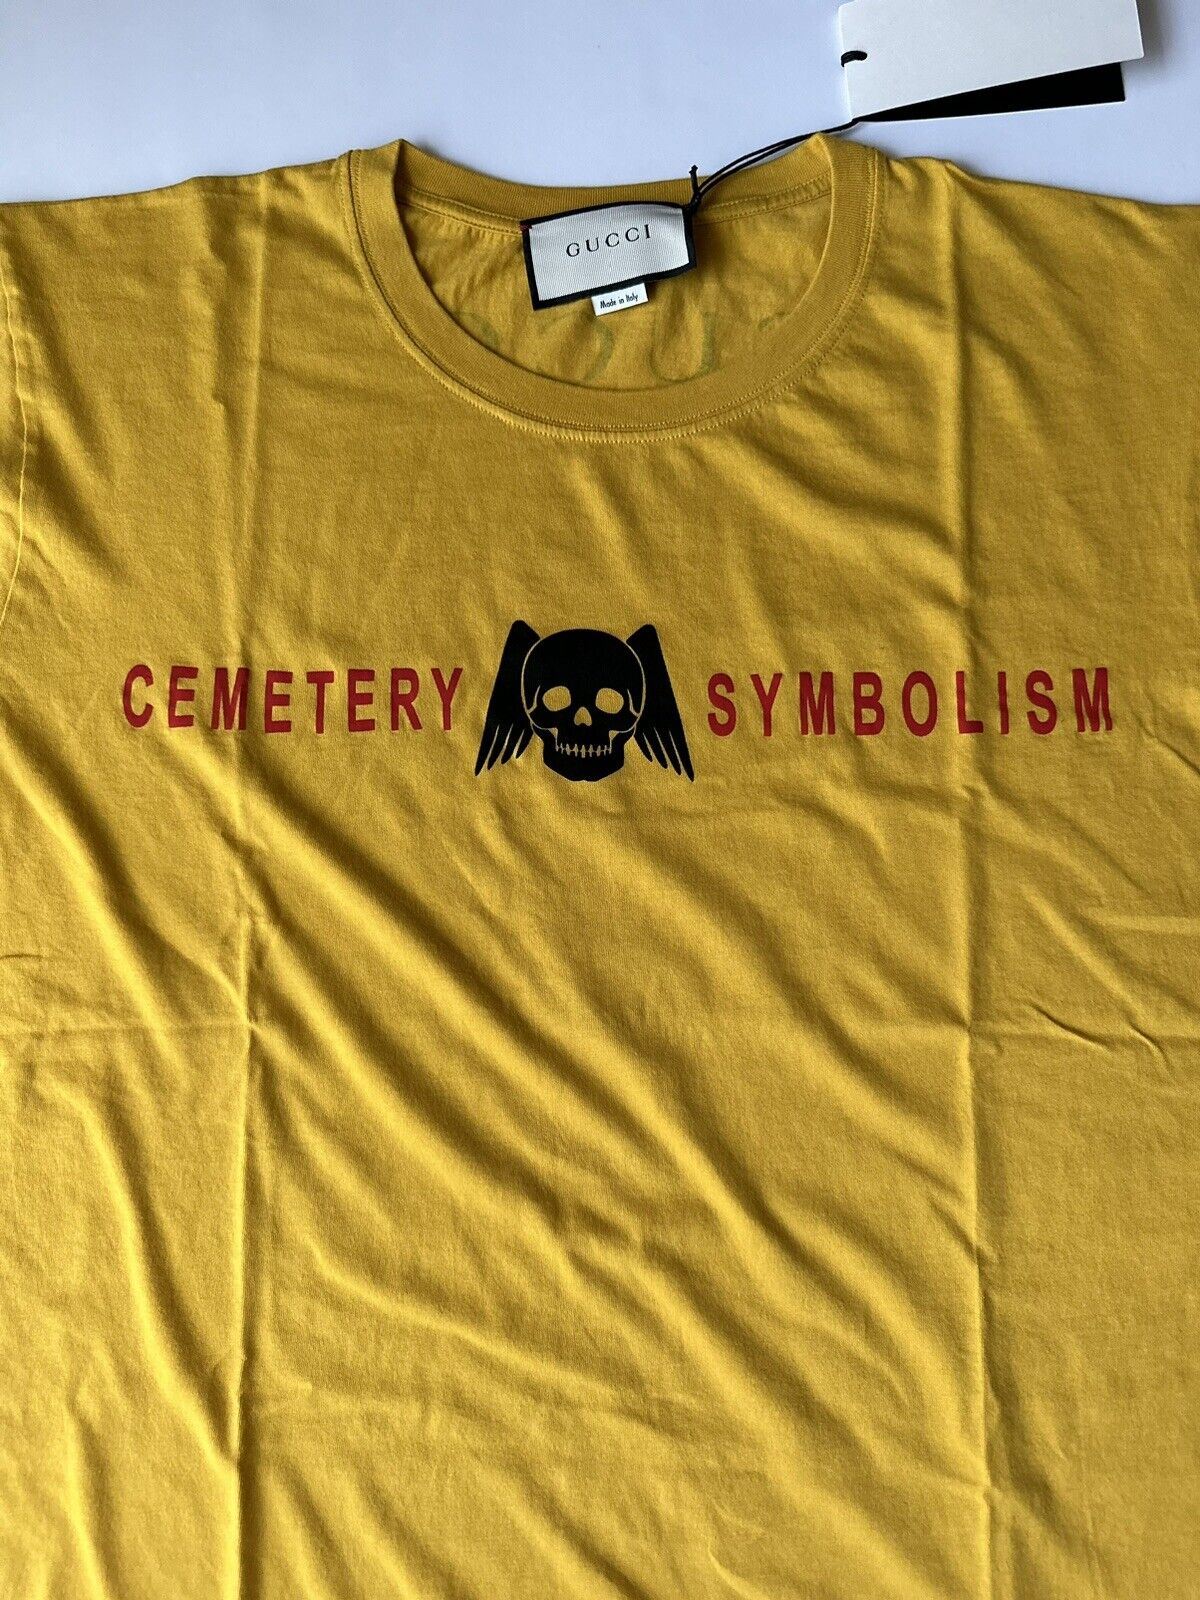 NWT Gucci Cemetery Symbolism Gelbes Baumwolljersey-T-Shirt L 493117 Hergestellt in Italien